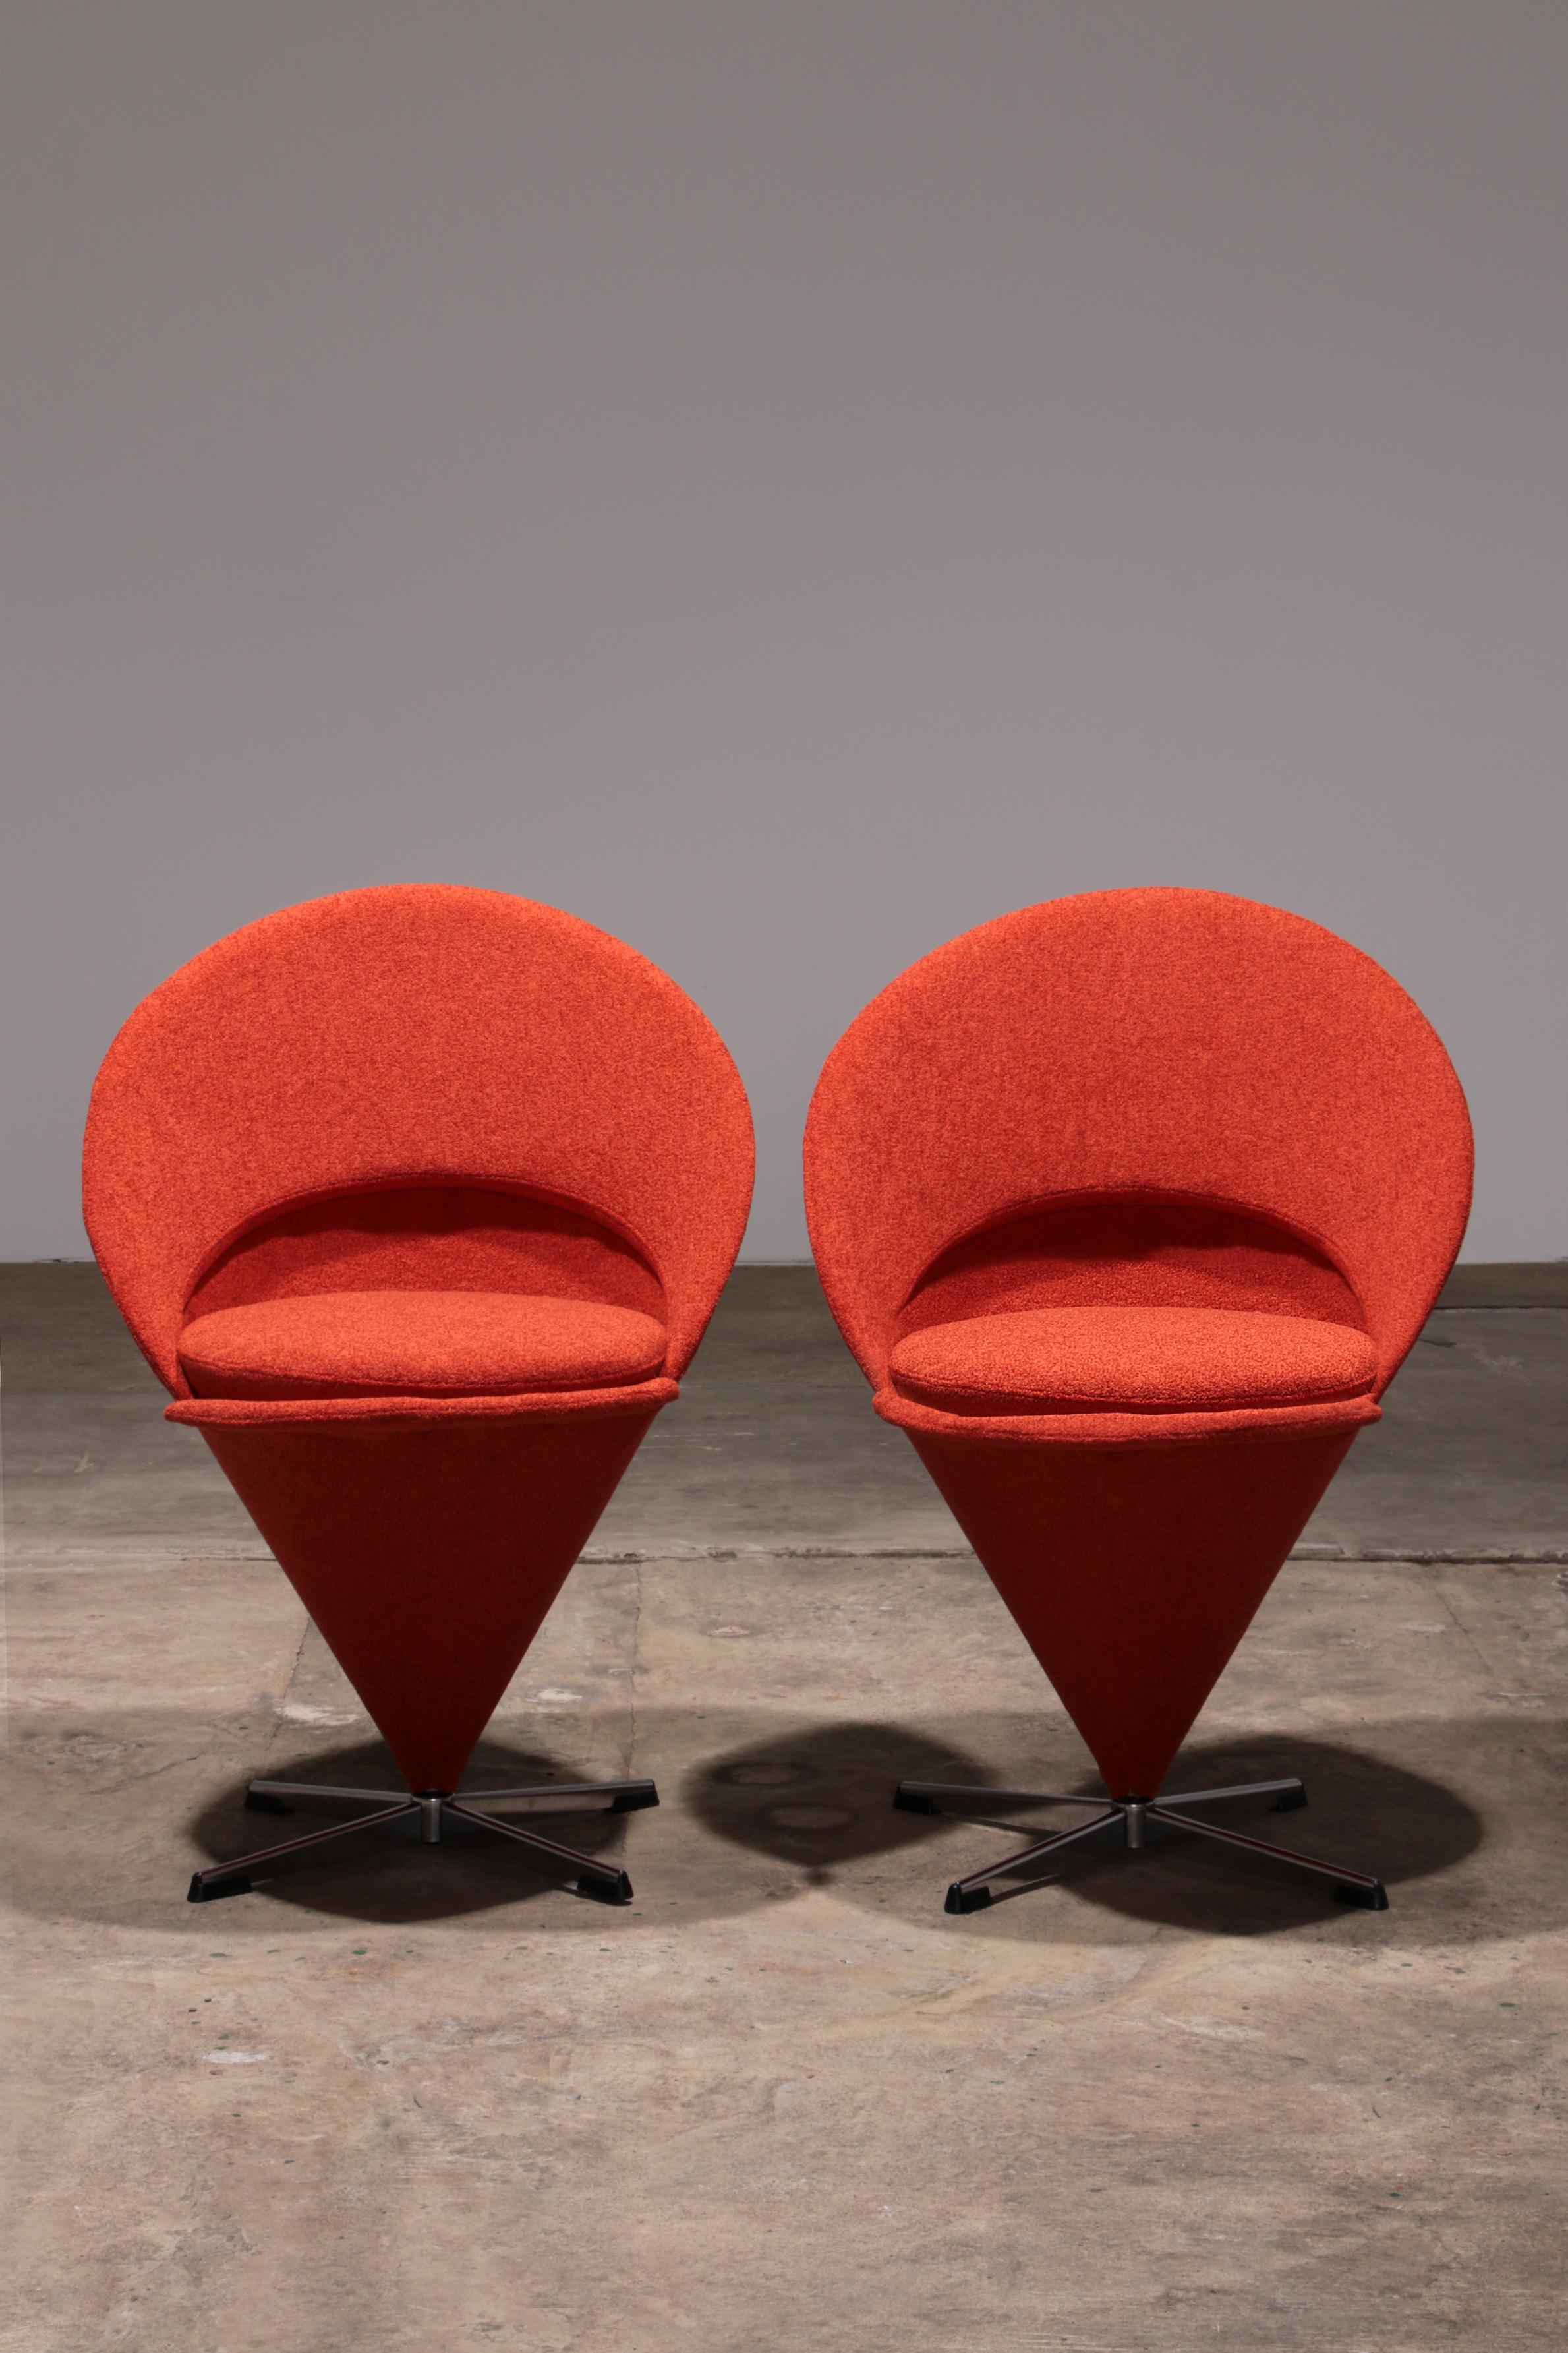 Danish Verner Panton Model Cone K1 Chair from Timeless Design Classic